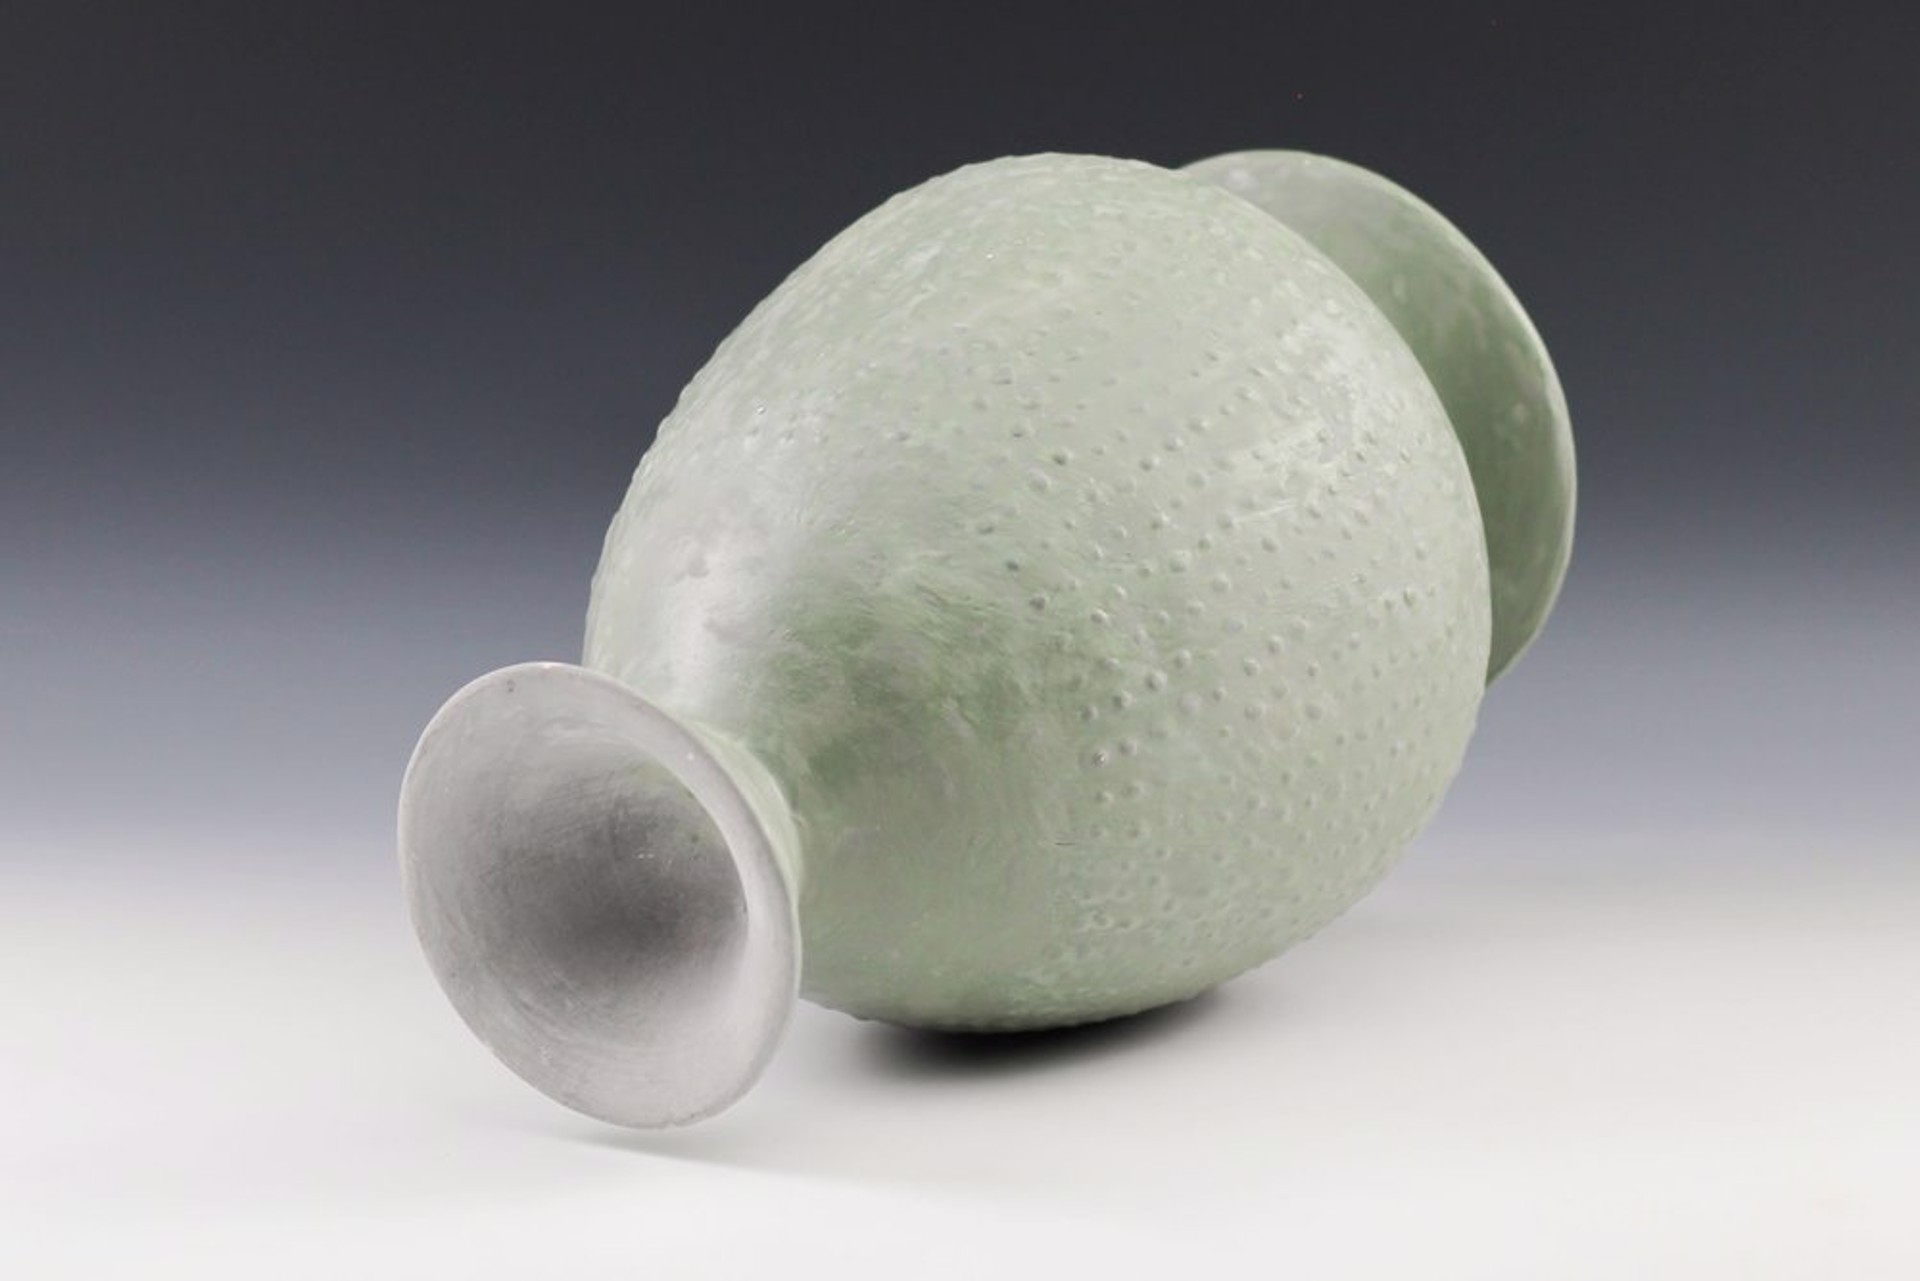 Vase with Dots by Maggie Jaszczak